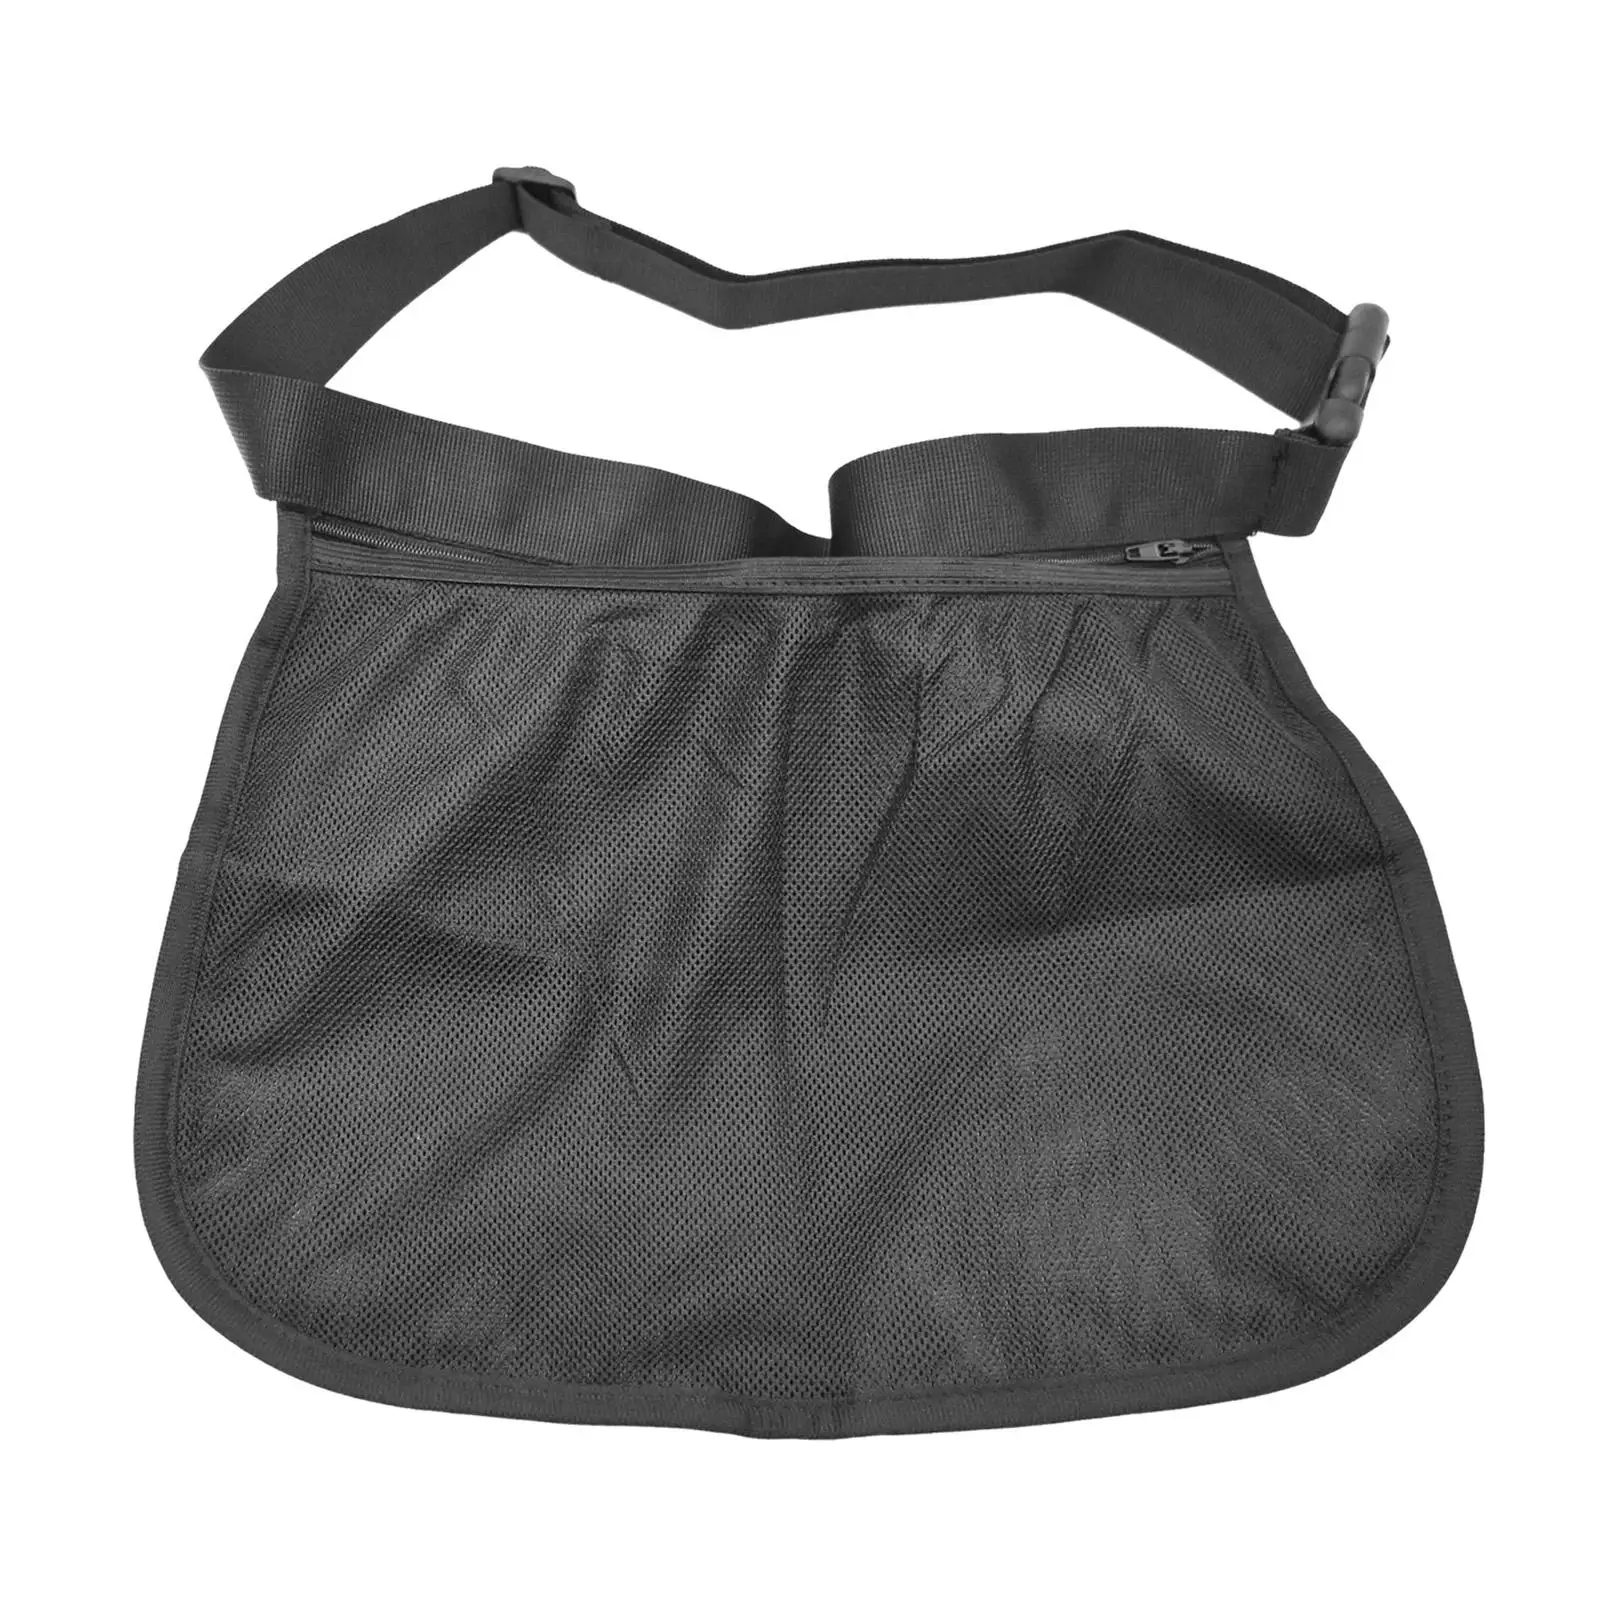 Tennis Ball Holder Mesh Storage Bag for Storing Balls and Phones Exercise